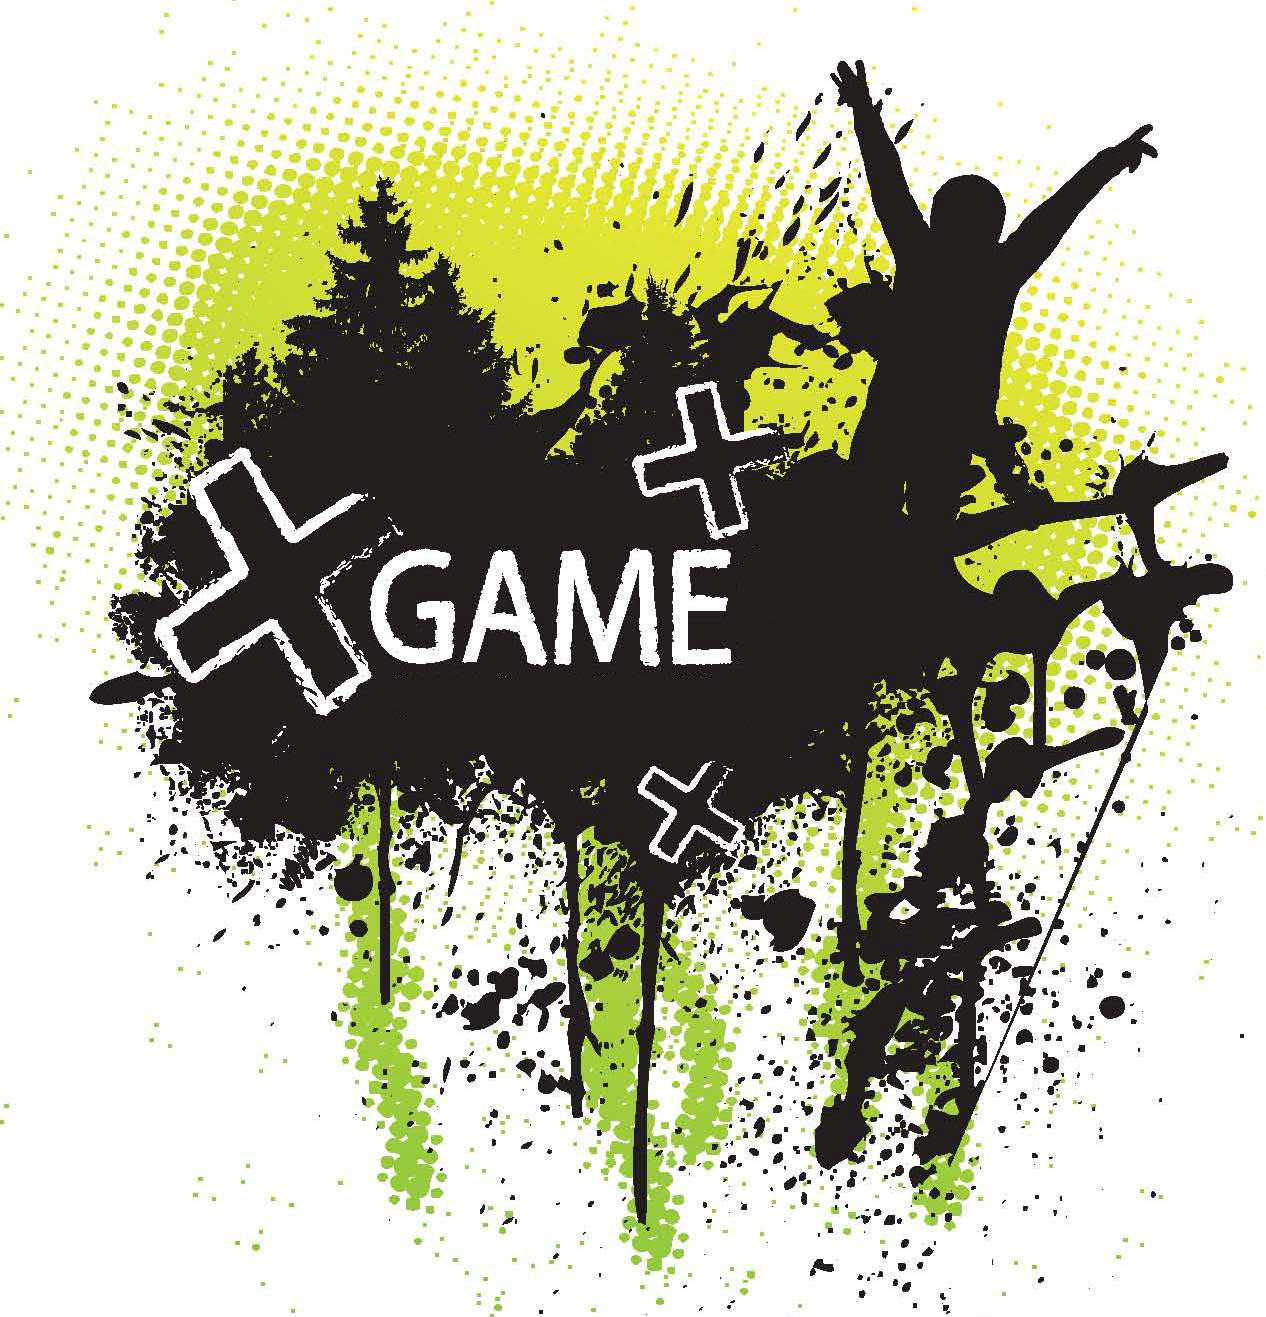 http://x-game.loxblog.com/upload/x/x-game/image/xgames_logo_2009.jpg